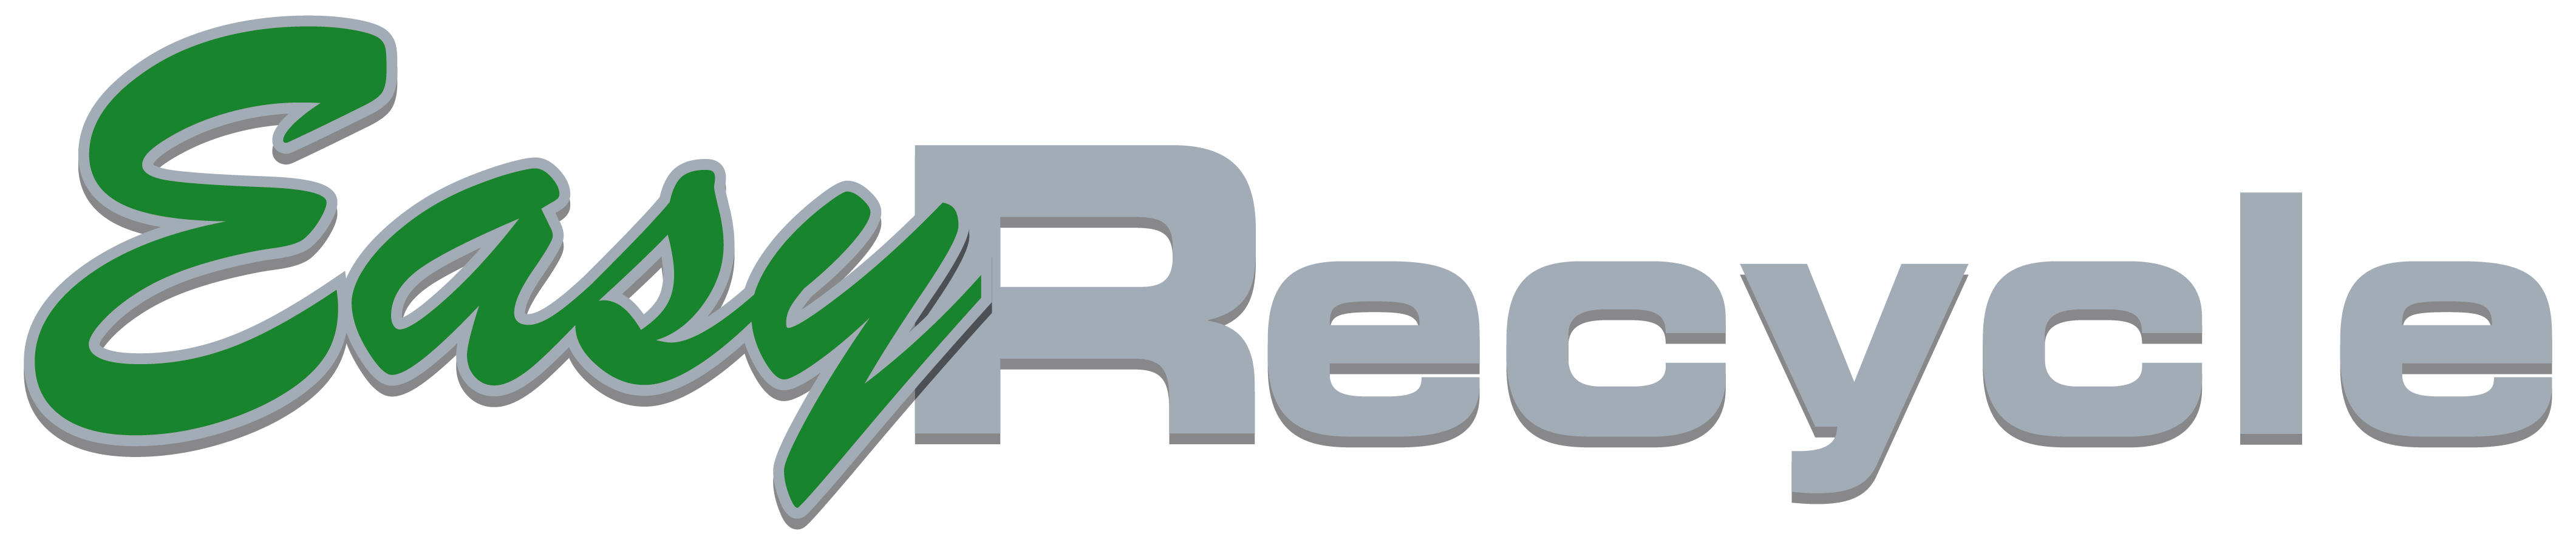 EasyRecycle logo mobil